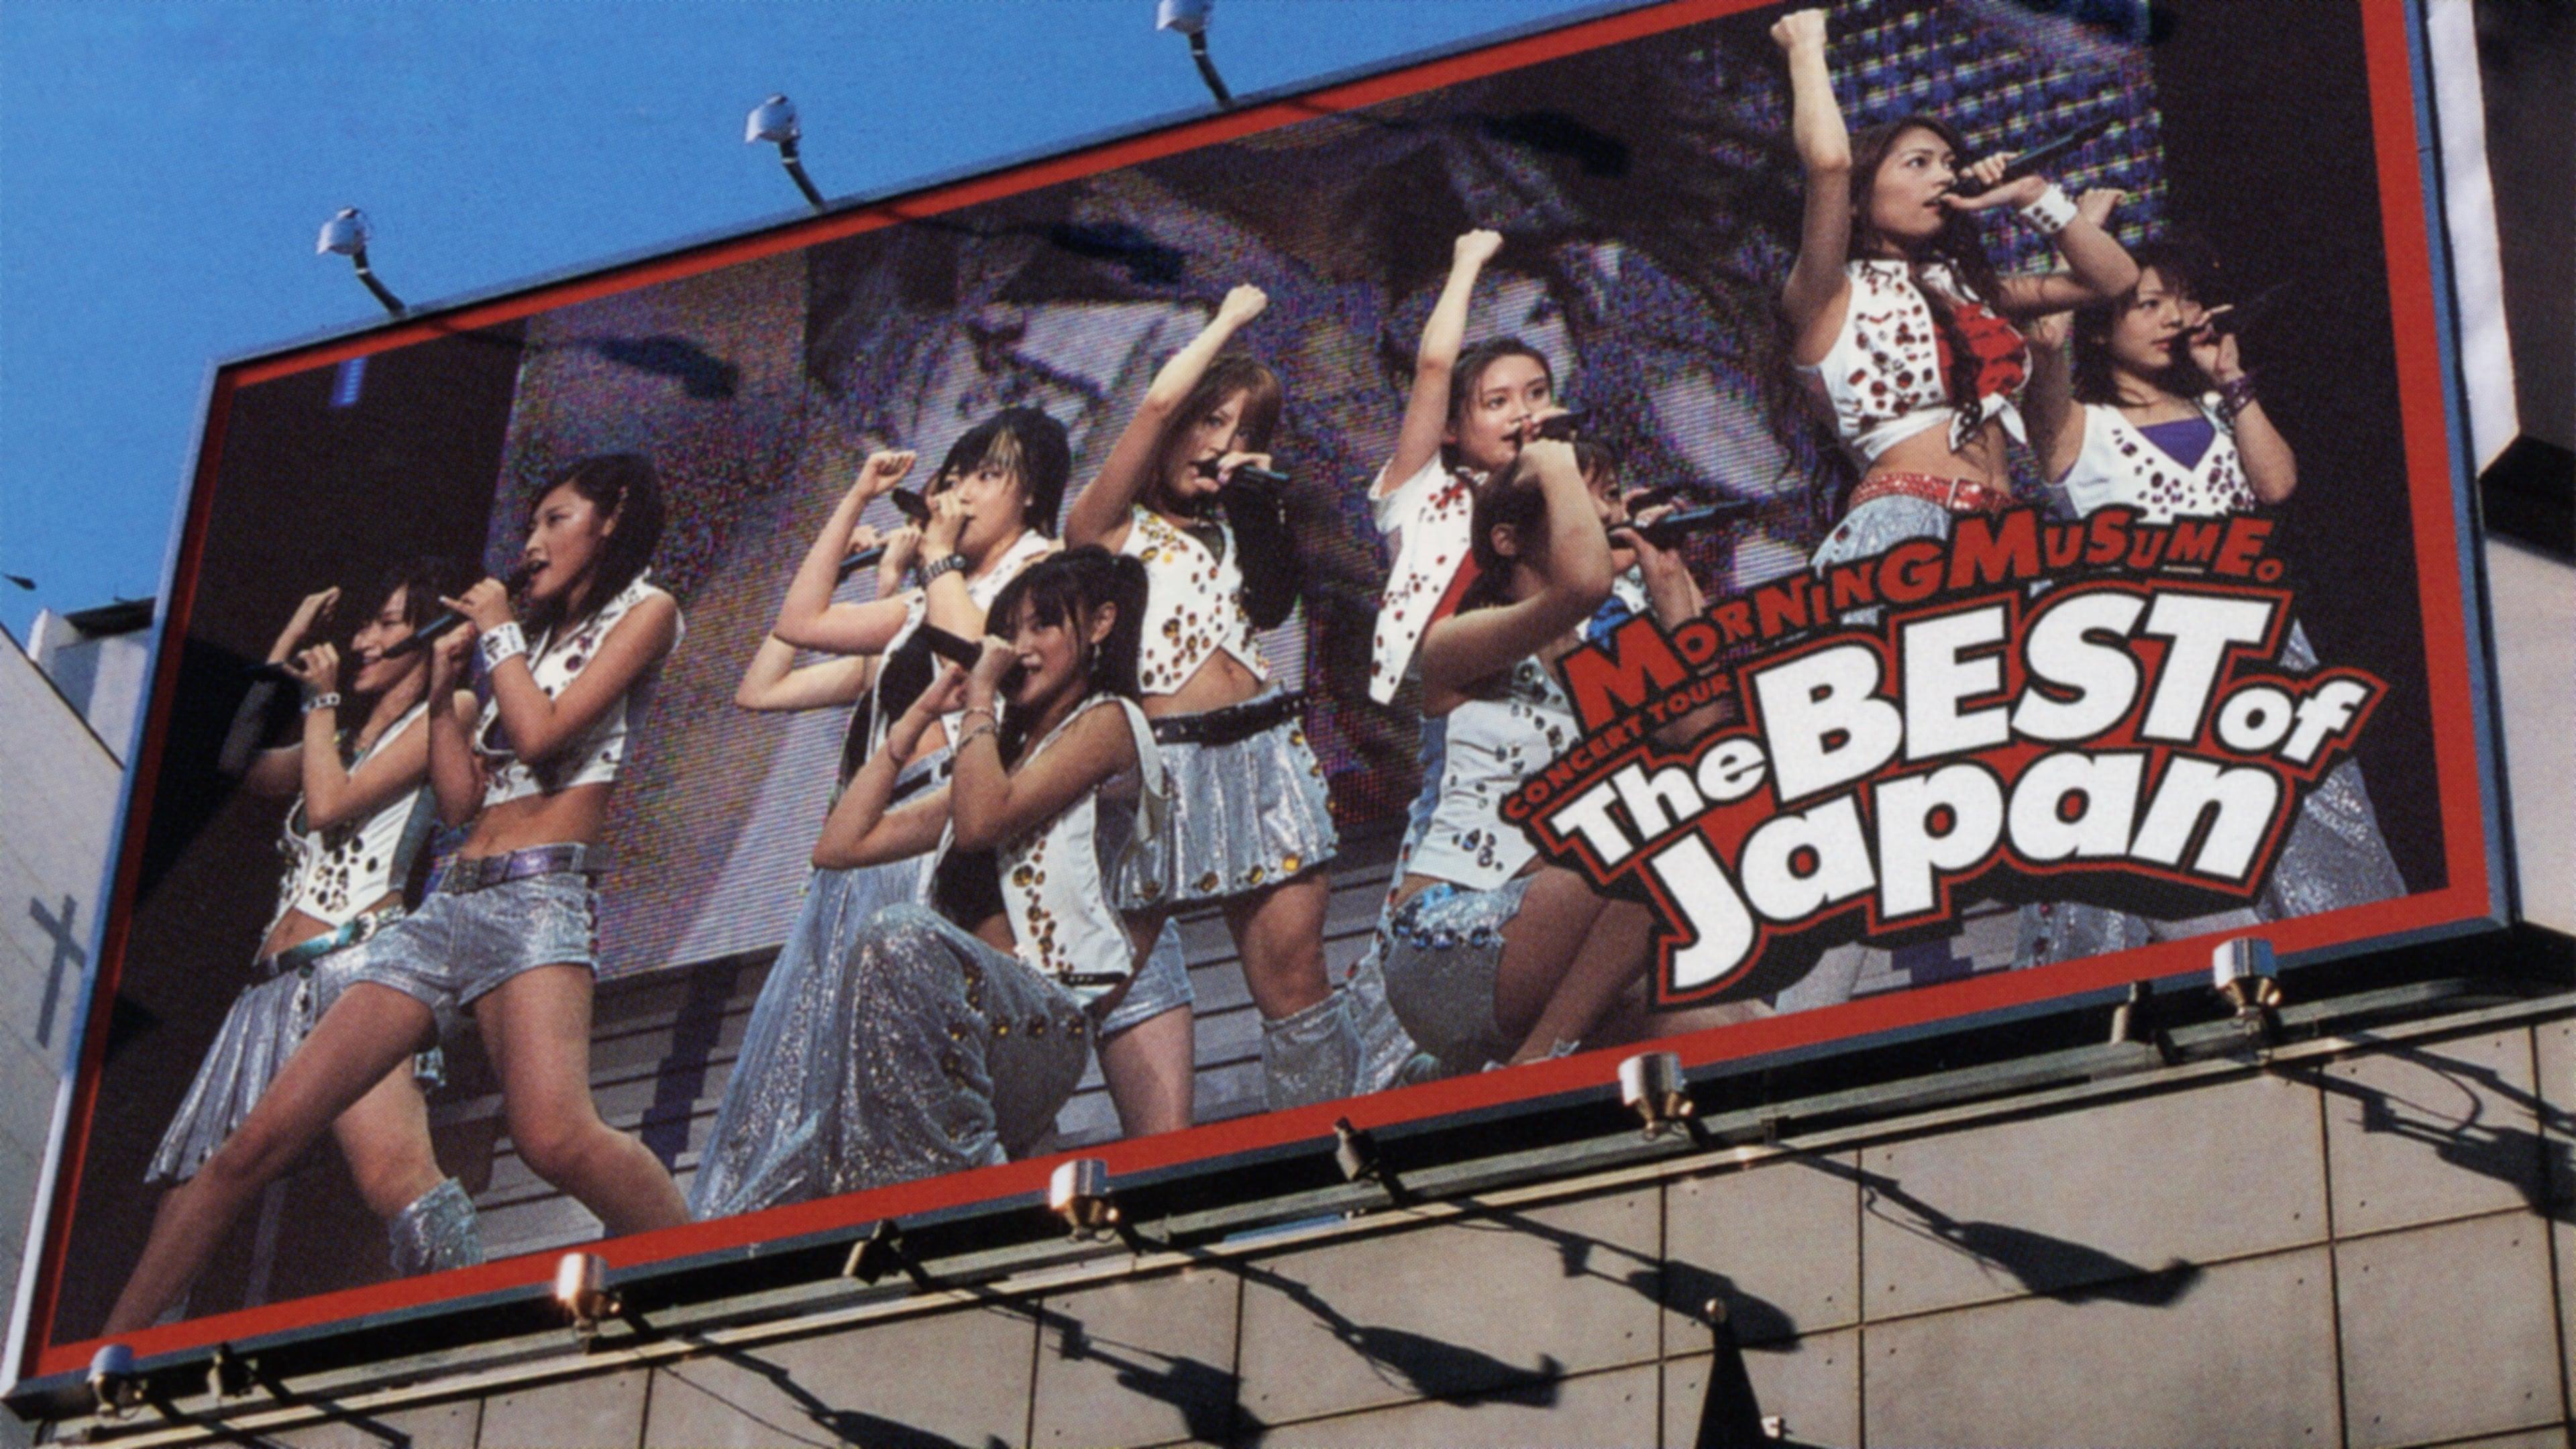 Morning Musume. 2004 Summer "The BEST of Japan Natsu ~ Aki '04" backdrop